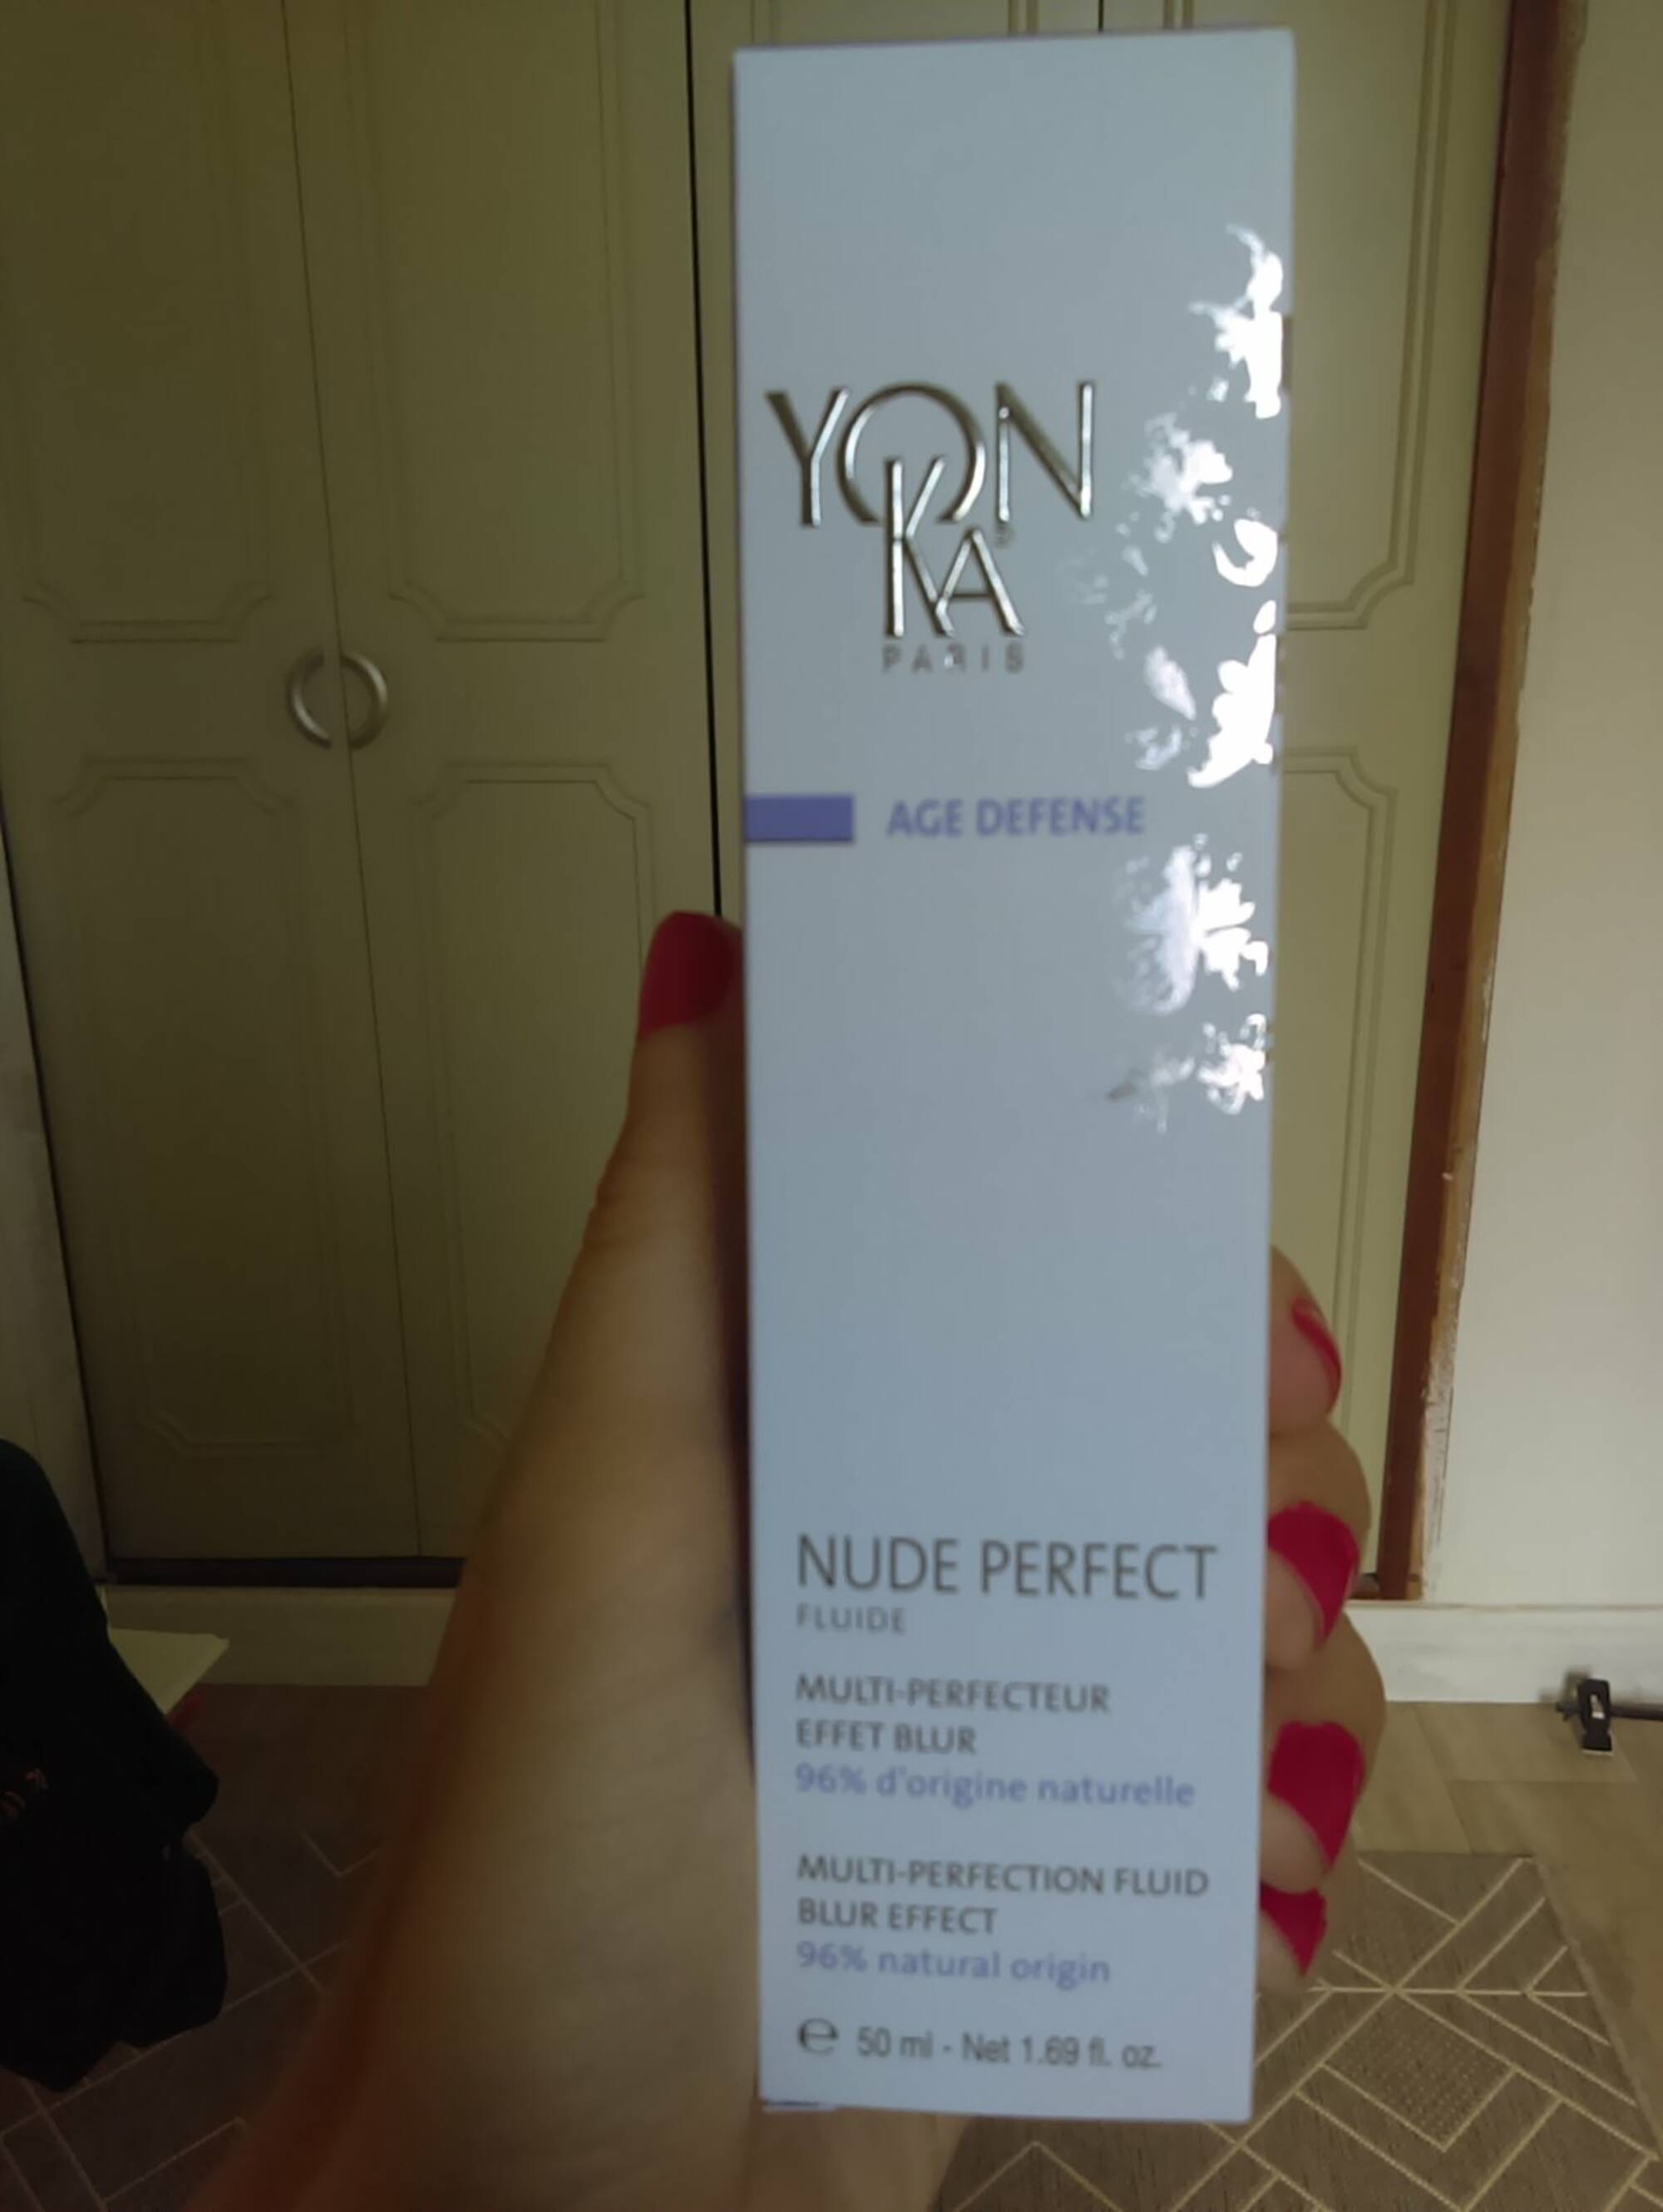 YONKA - Age defense - Nude perfect fluide